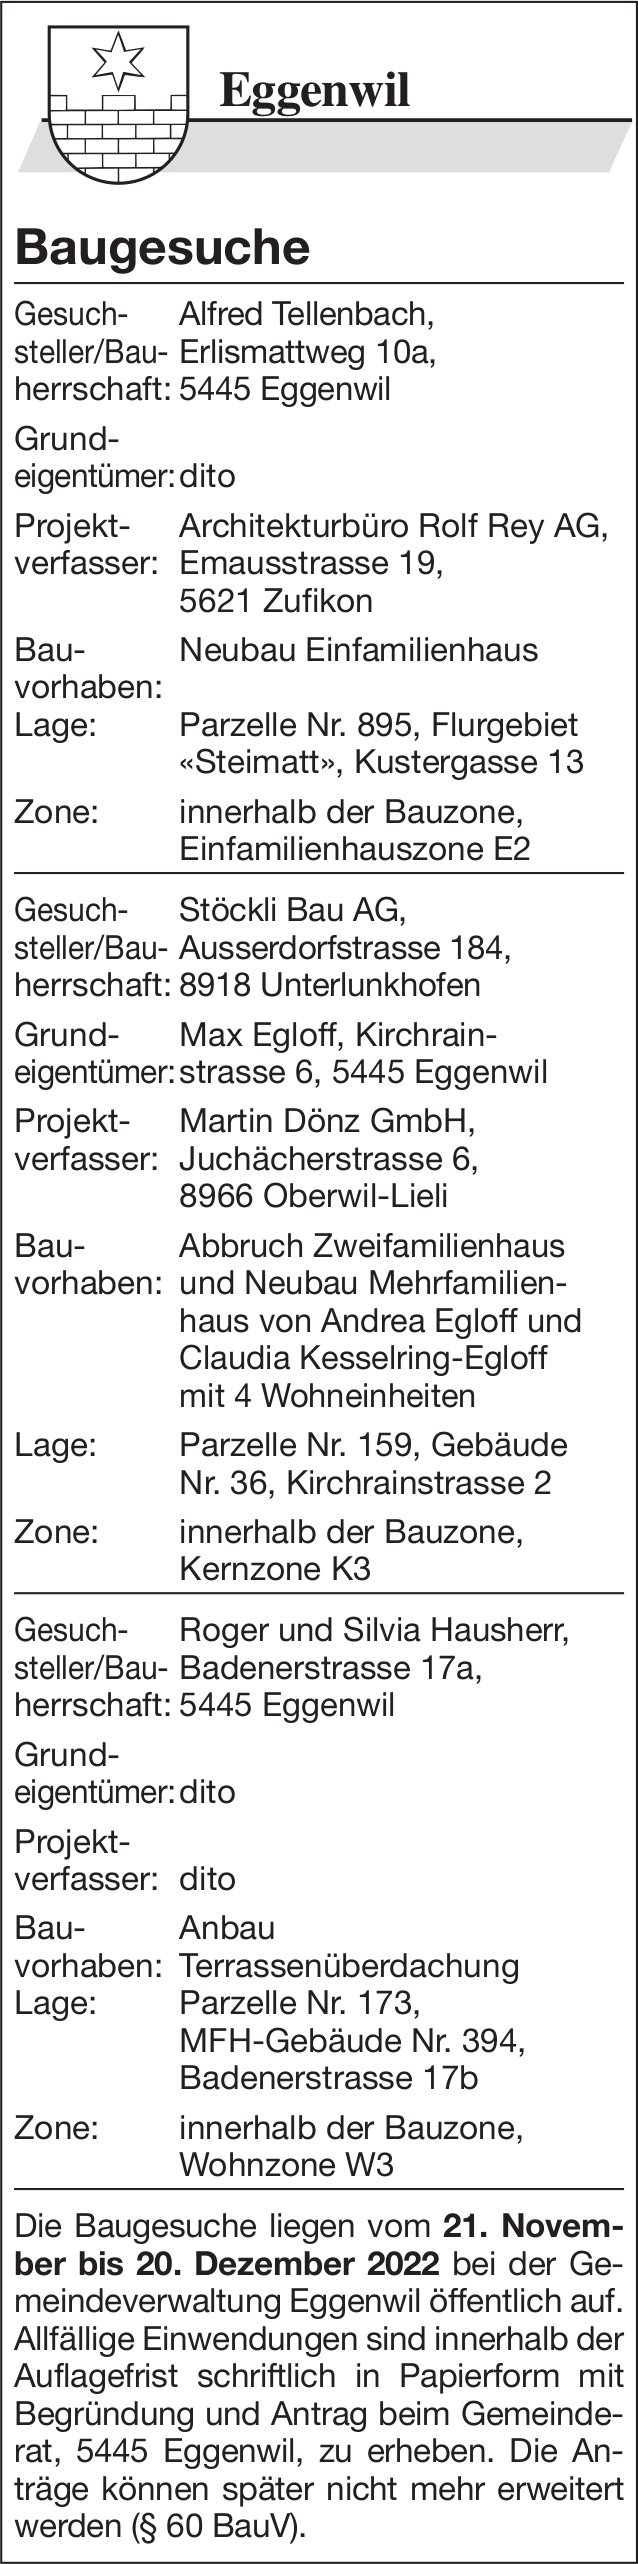 Baugesuche, Eggenwil - Alfred Tellenbach